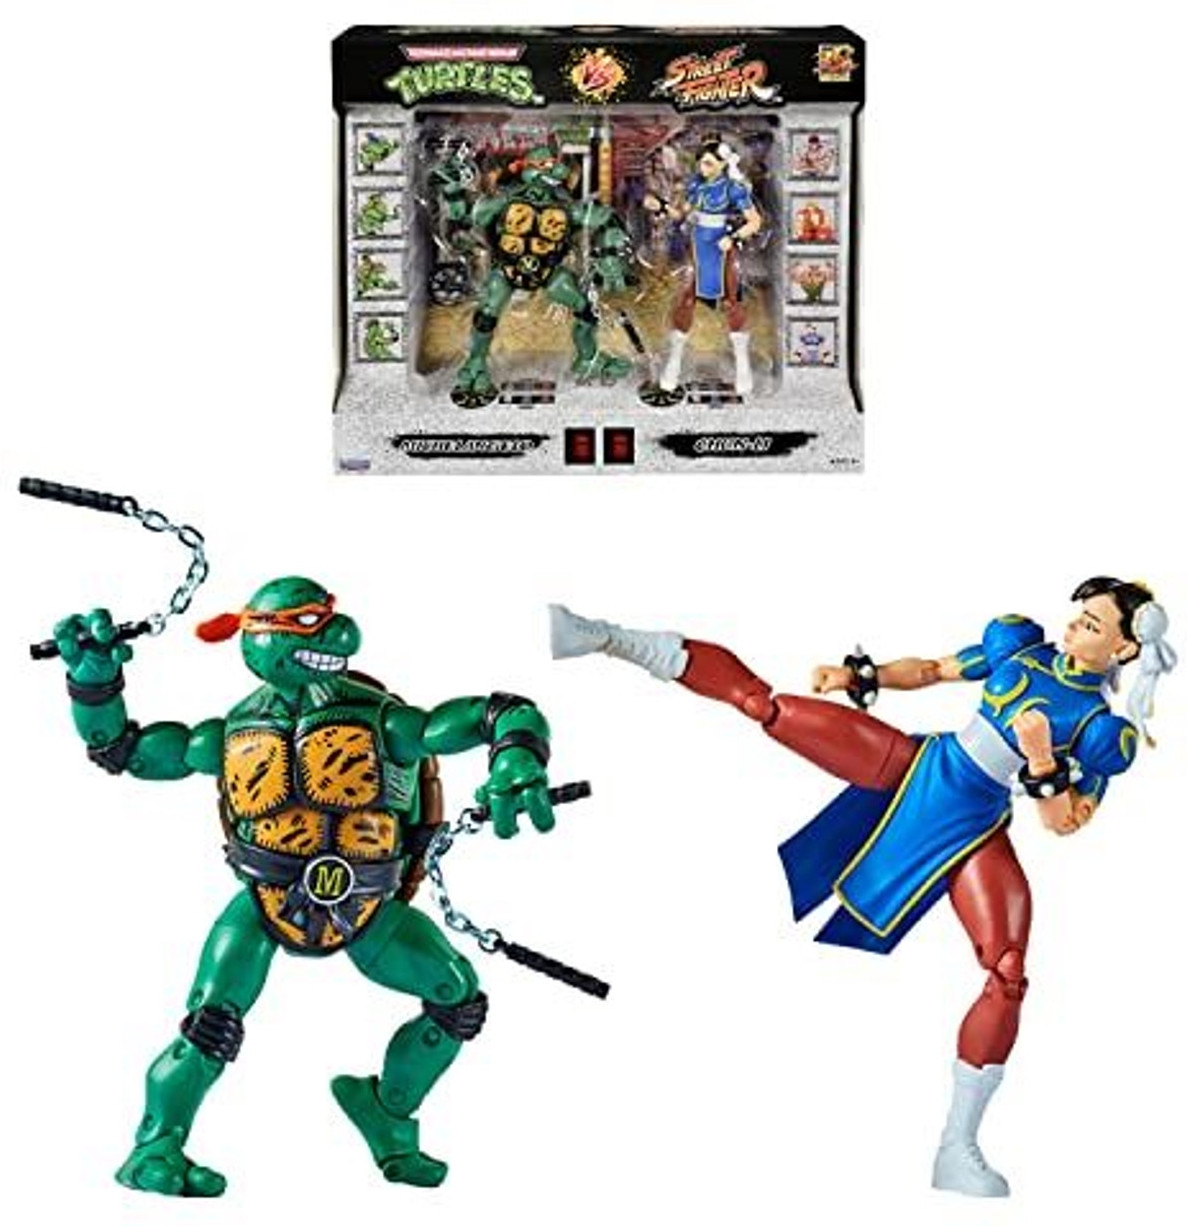 Teenage Mutant Ninja Turtles & Street Fighter Action Figure Double Pack - Michelangelo & Chun-Li